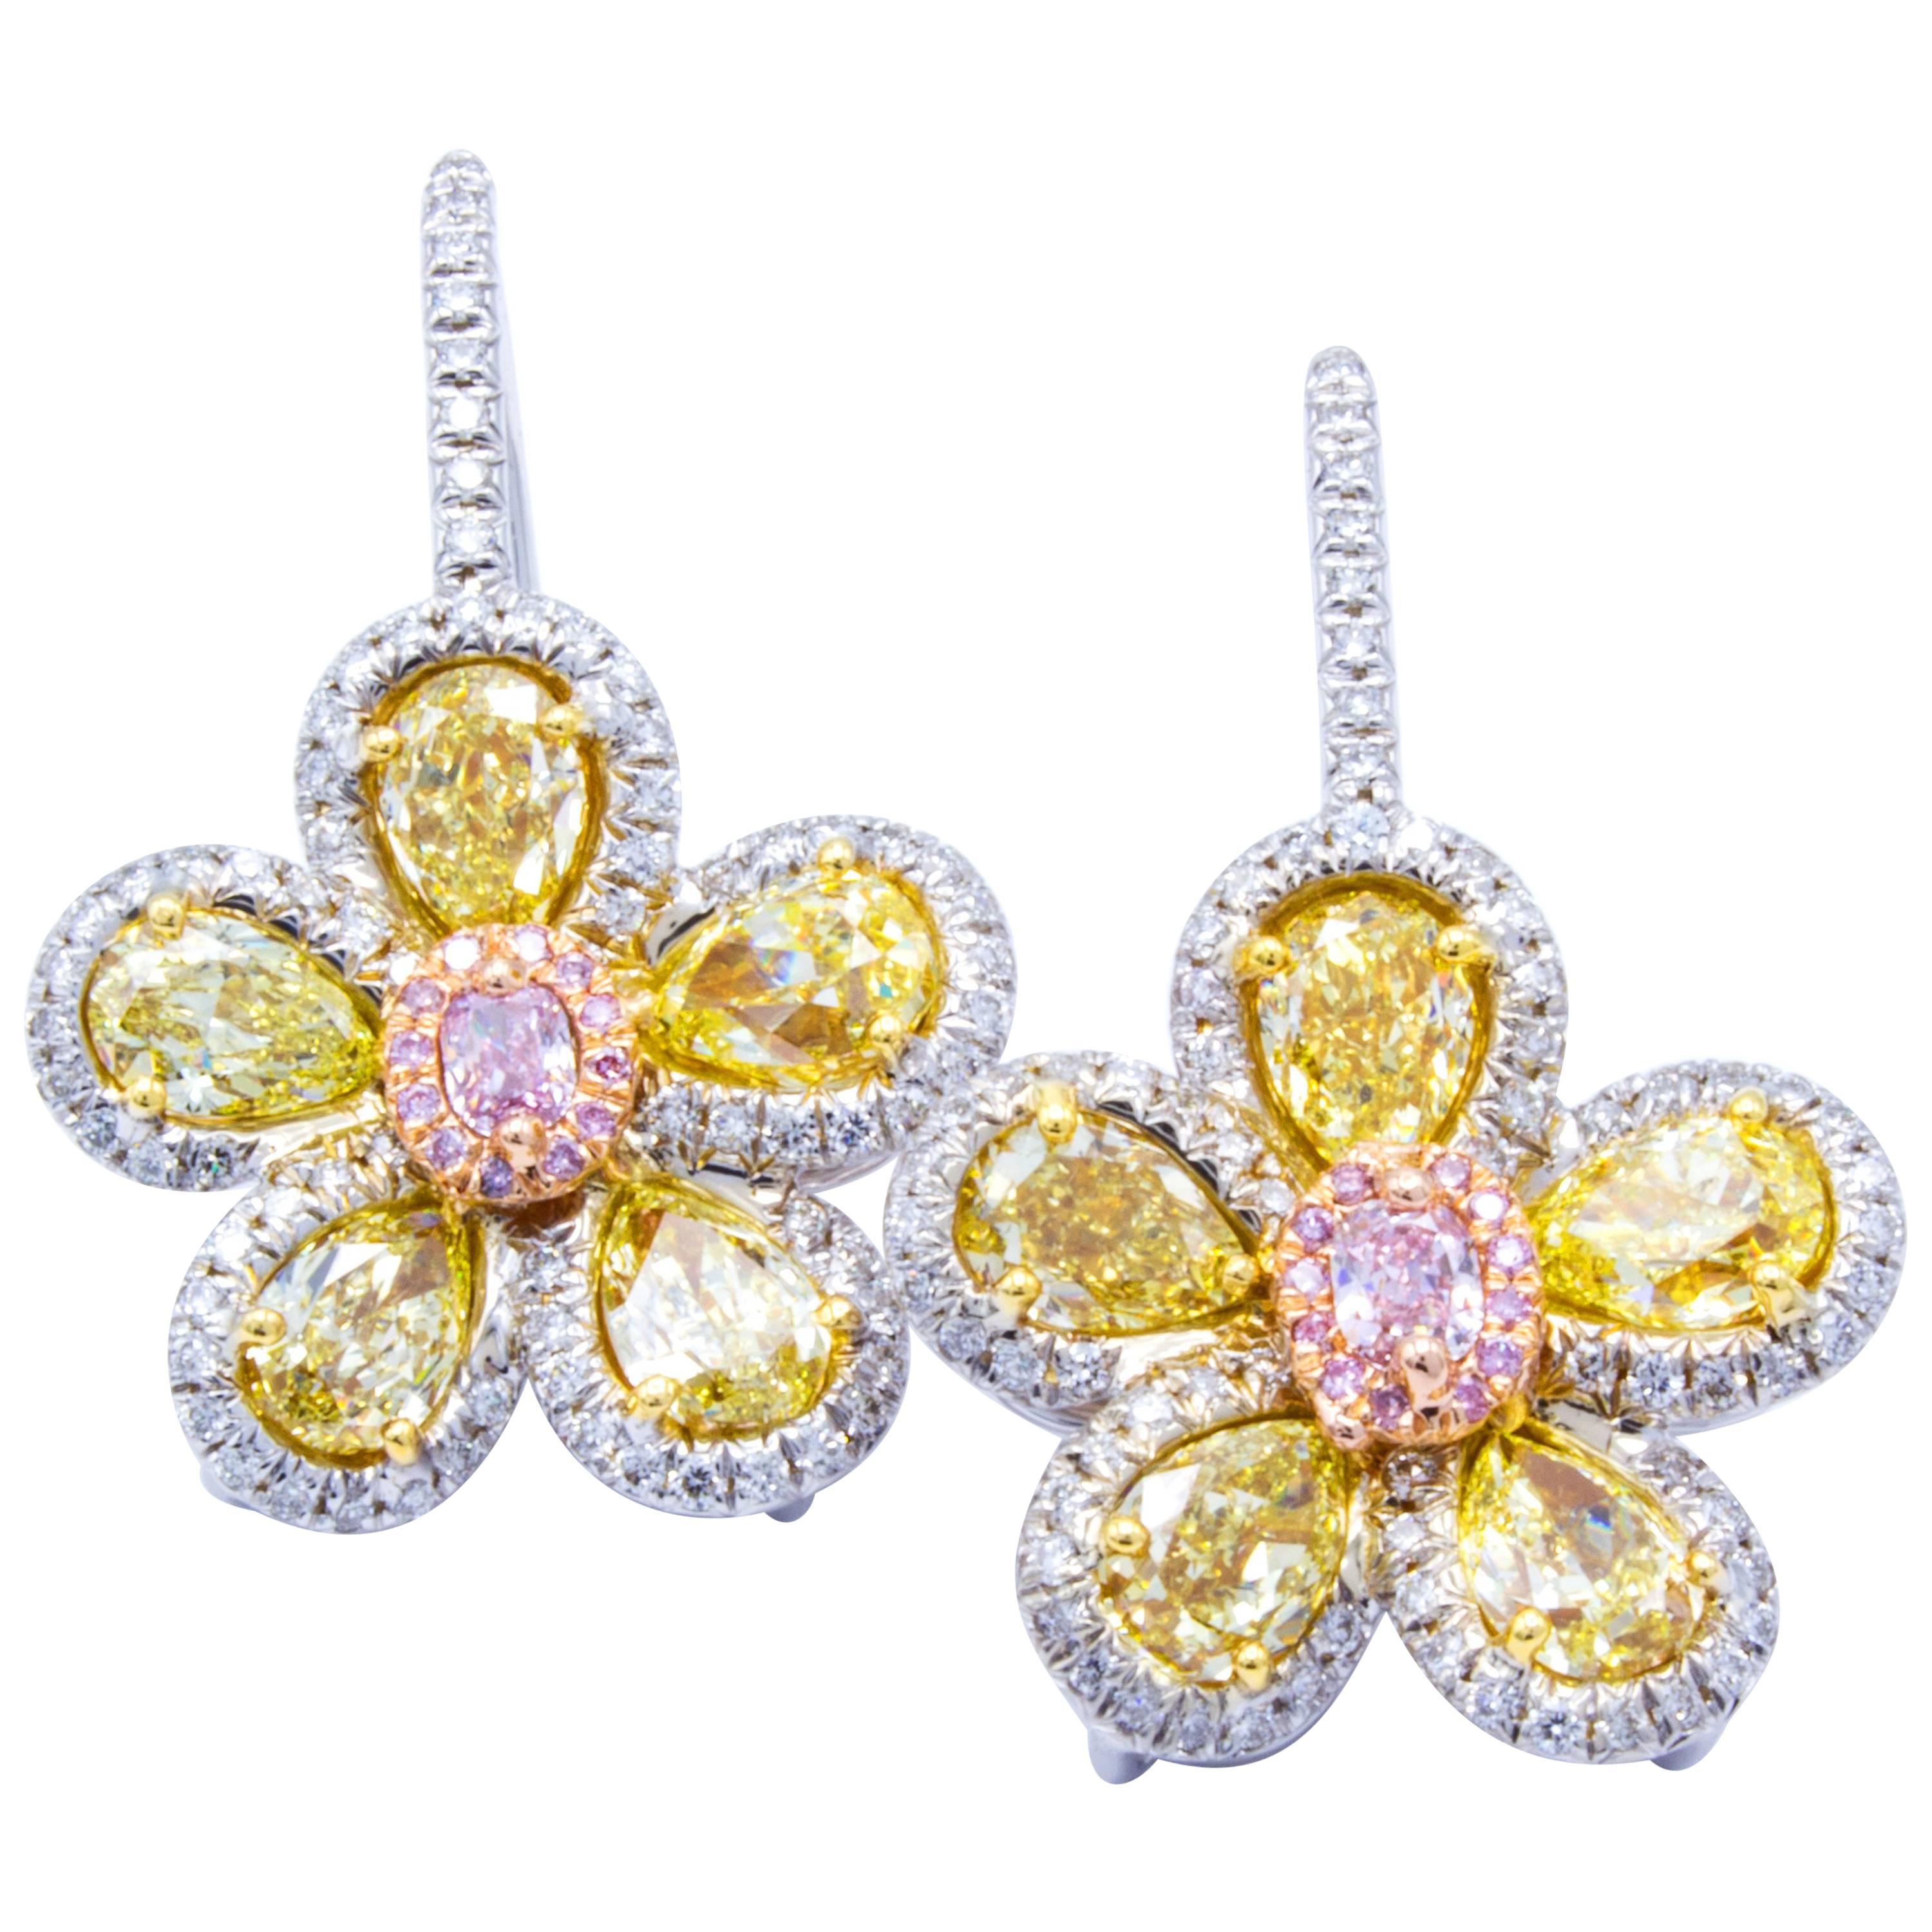 David Rosenberg 3.83 Total Carat Fancy Color Flower Diamond Earrings 18 Karat